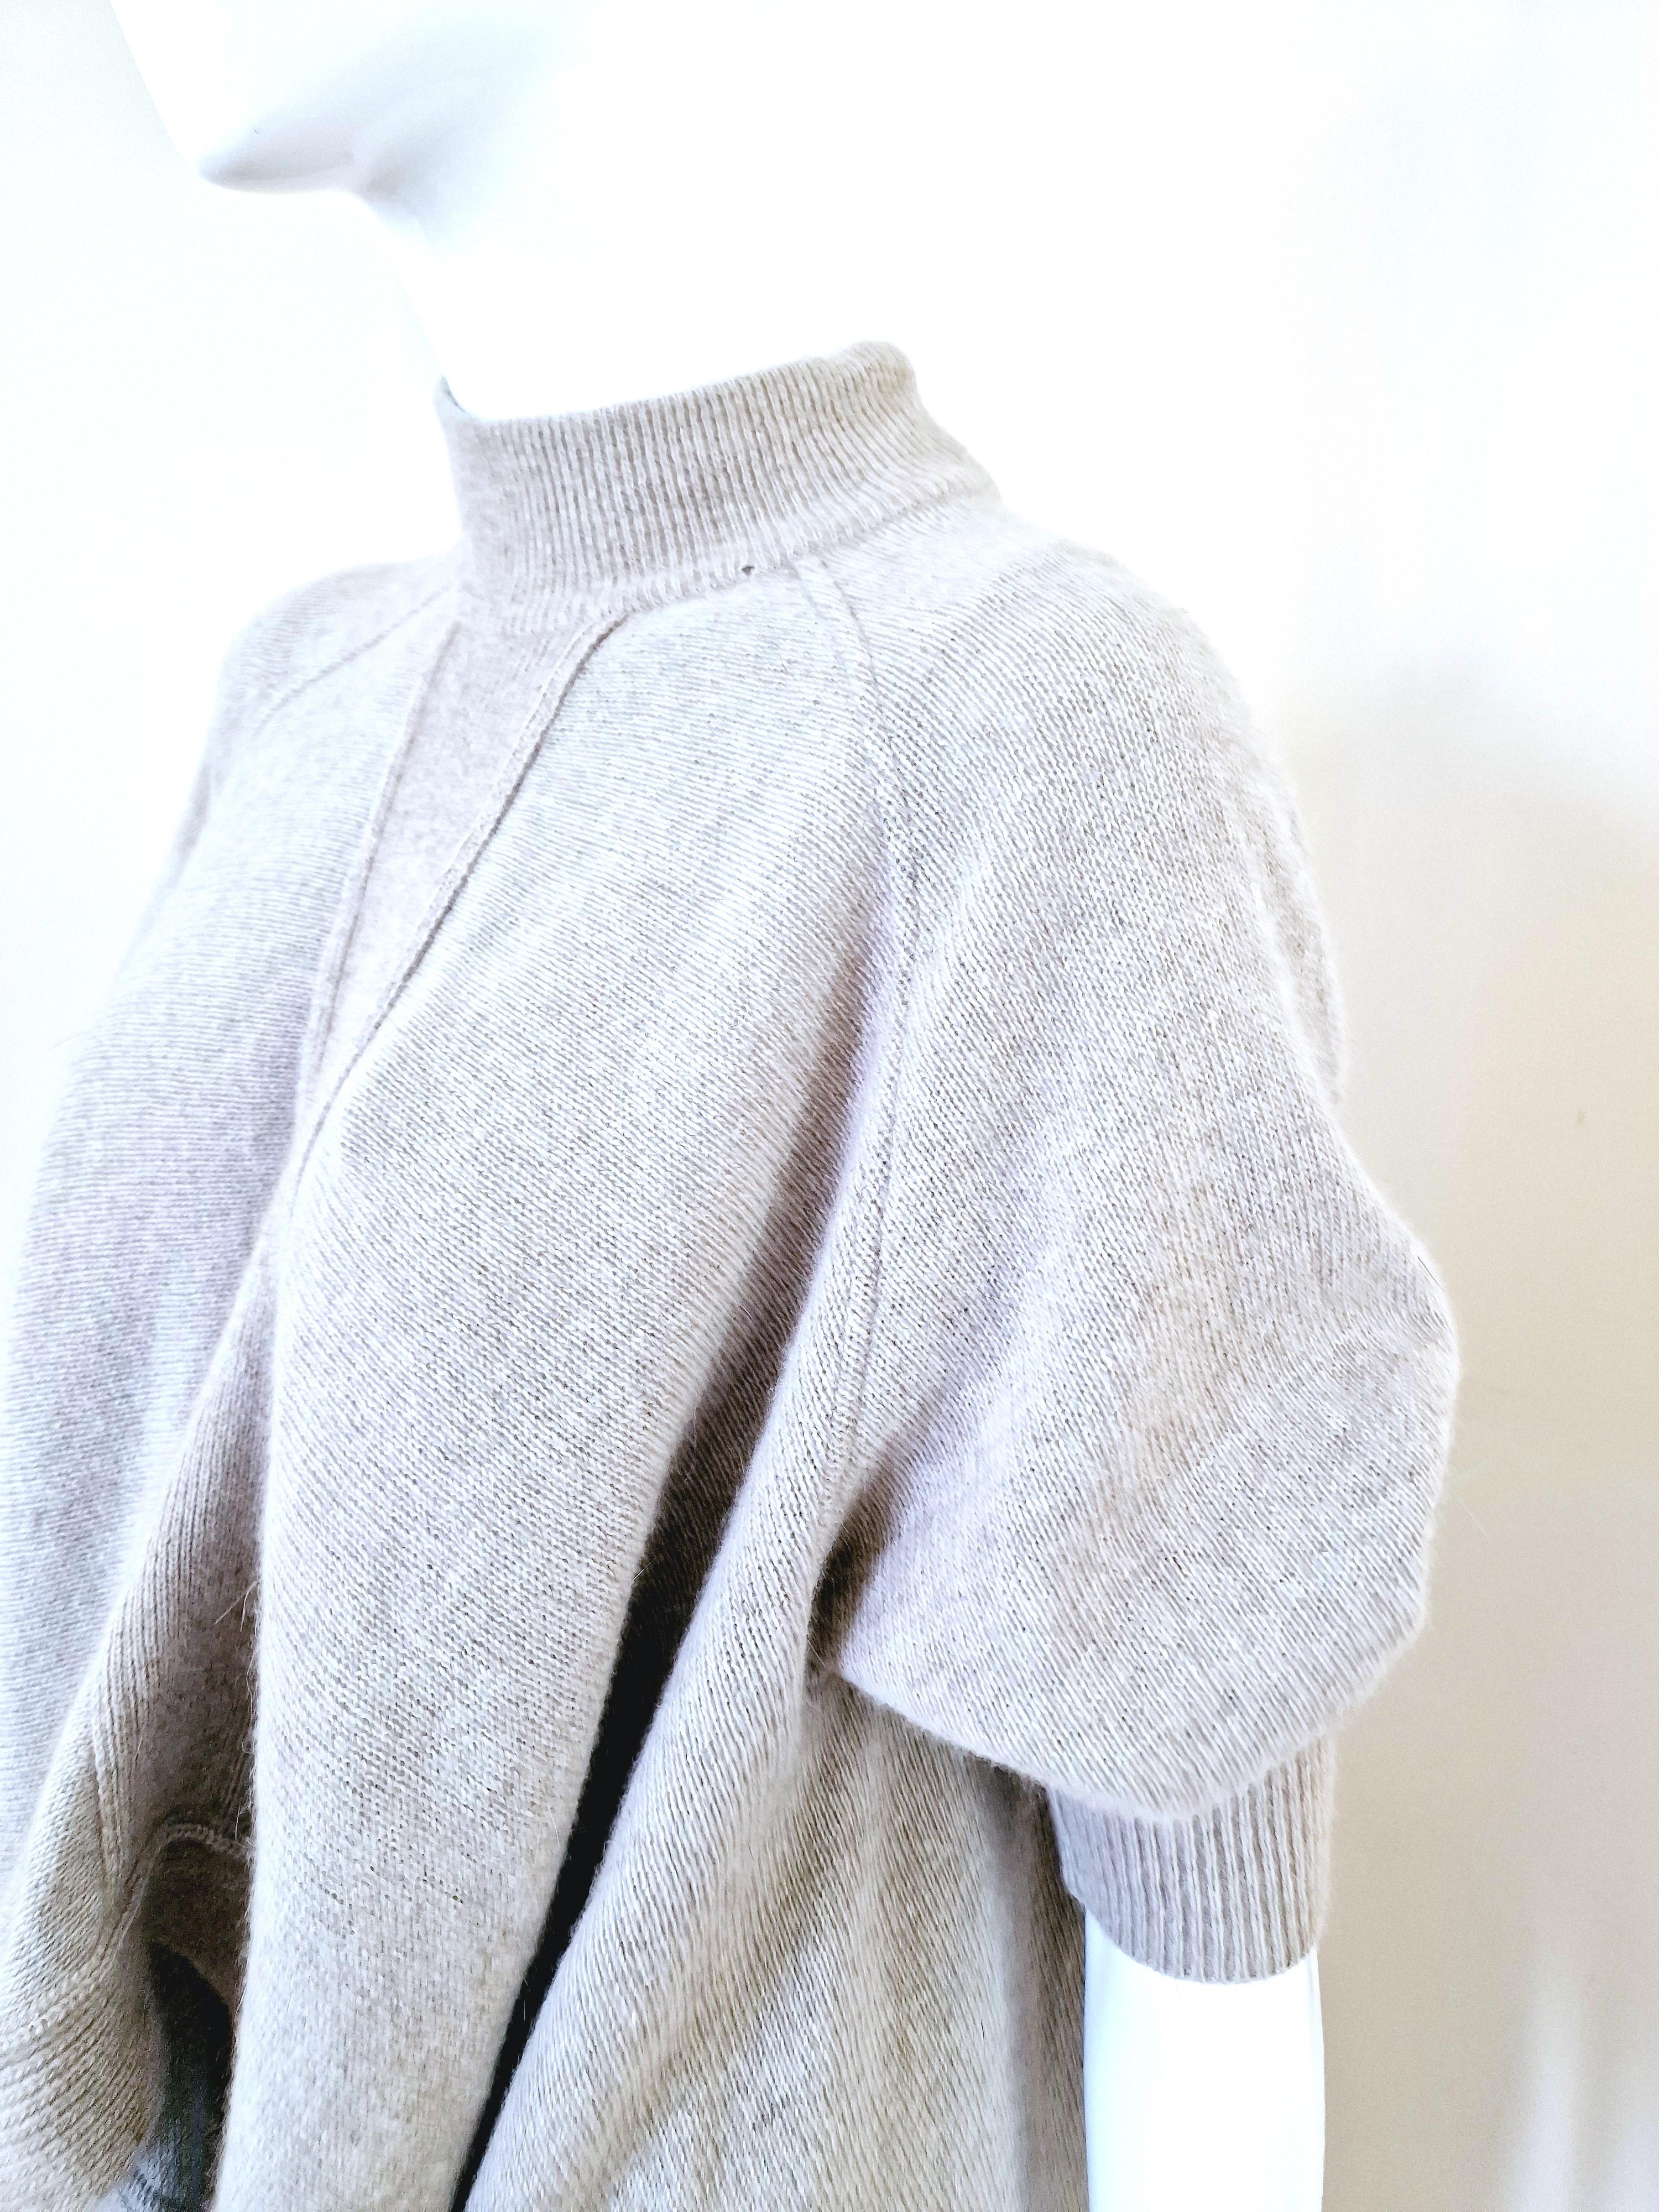 Issey Miyake Wool Multifunction Cutout Vintage Runway 80s Dress Sweater Coat For Sale 3